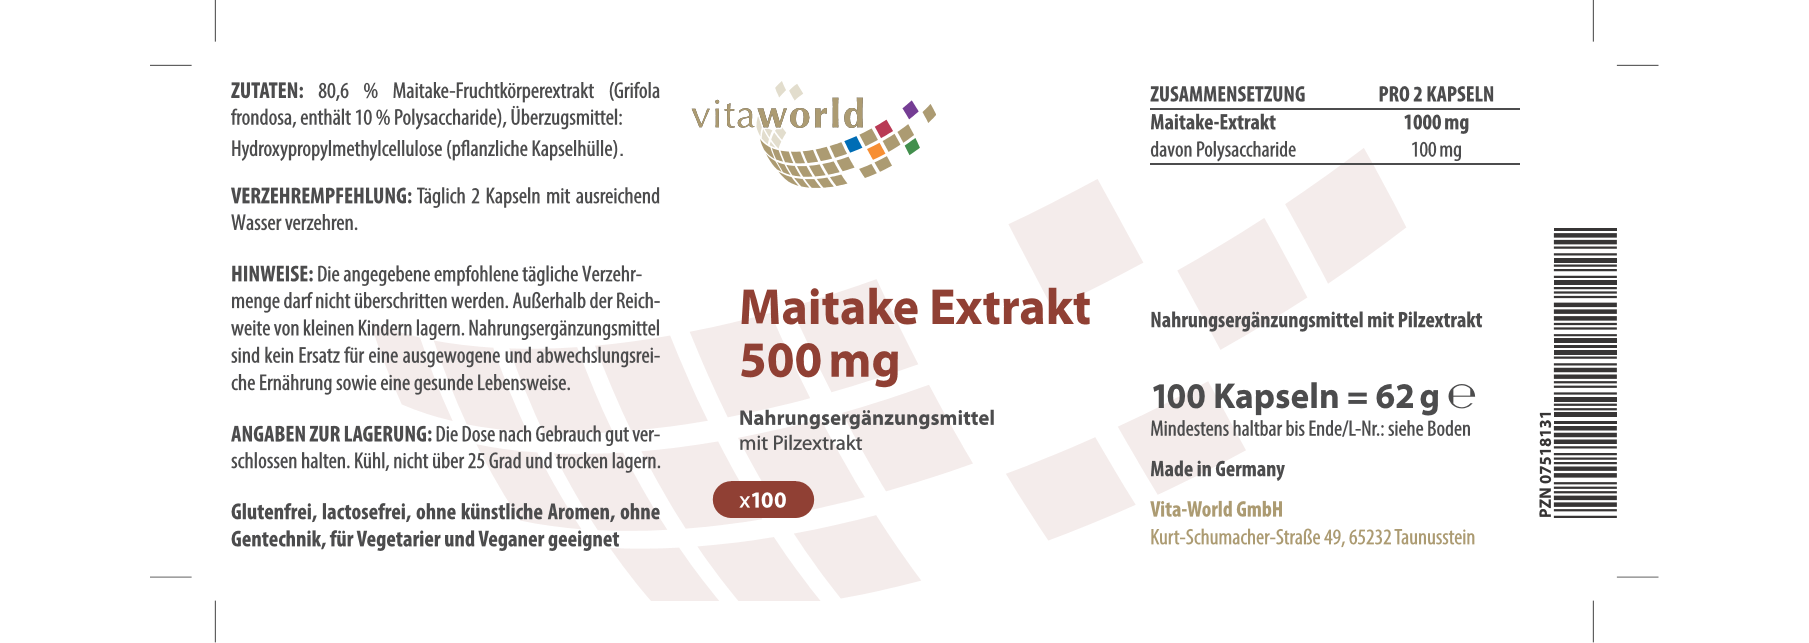 Maitake Extrakt 500 mg (100 Kps)